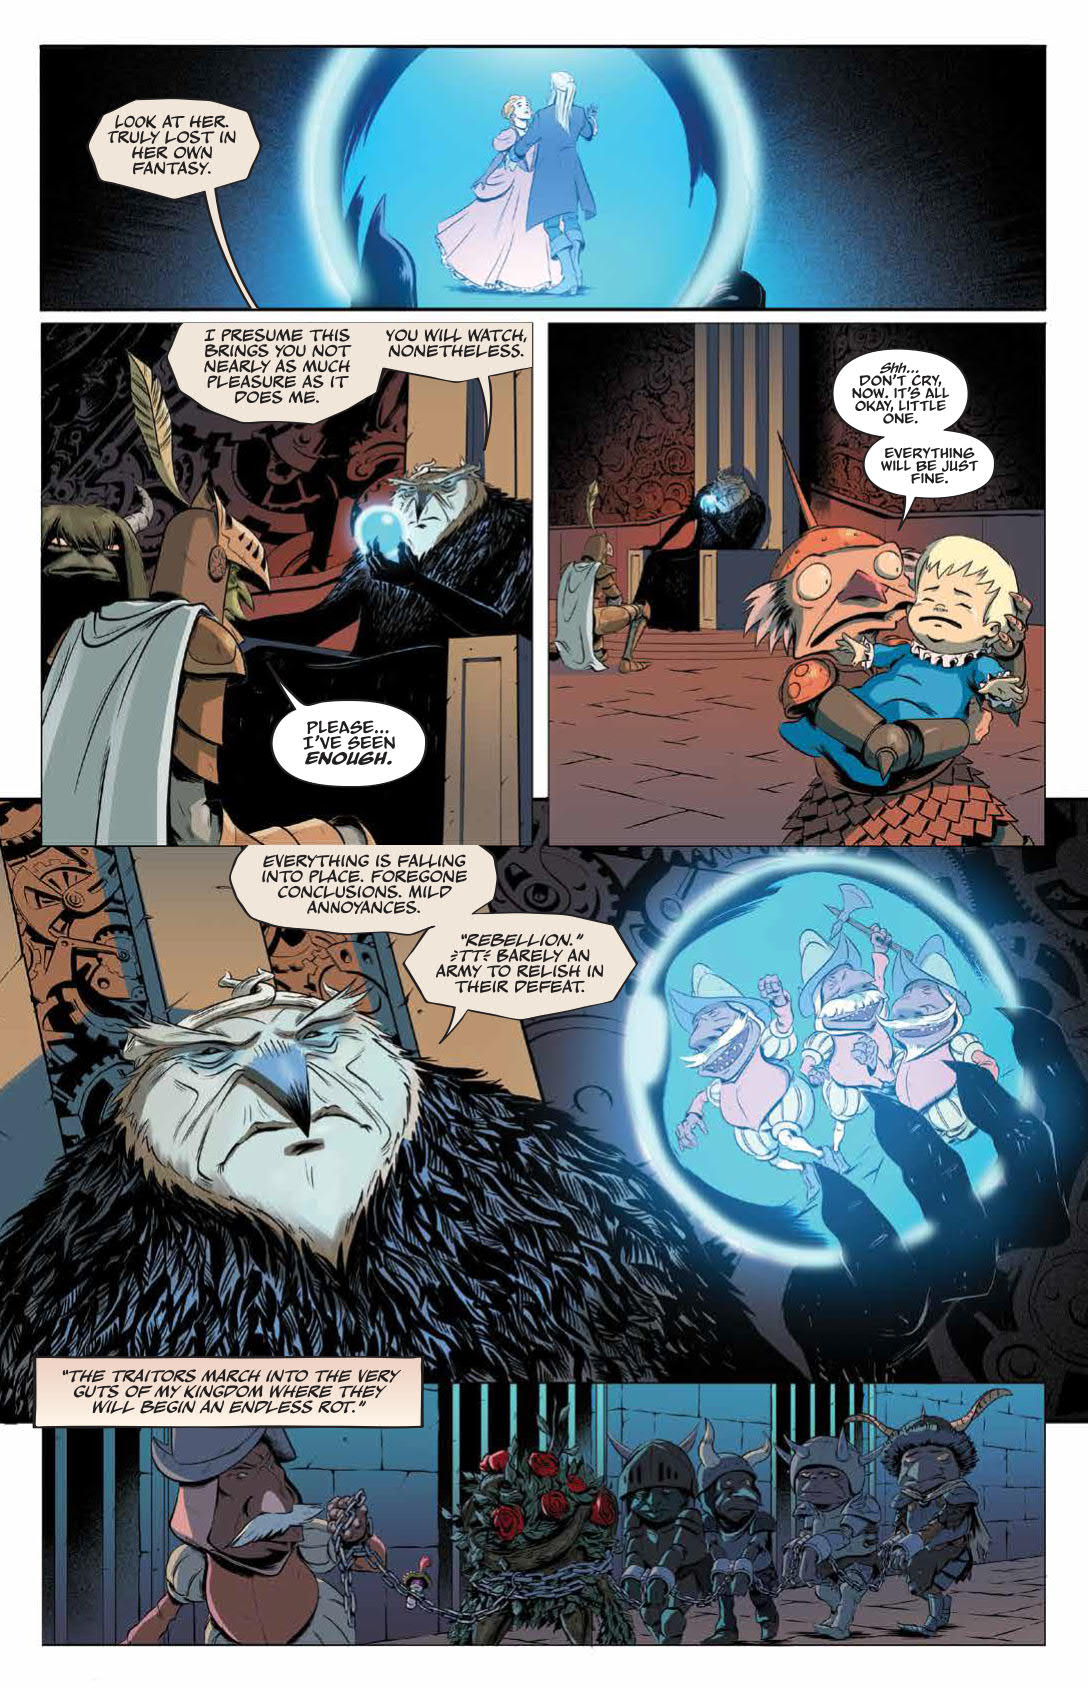 Jim Henson's Labyrinth: Coronation Vol. 3 Comics, Graphic Novels